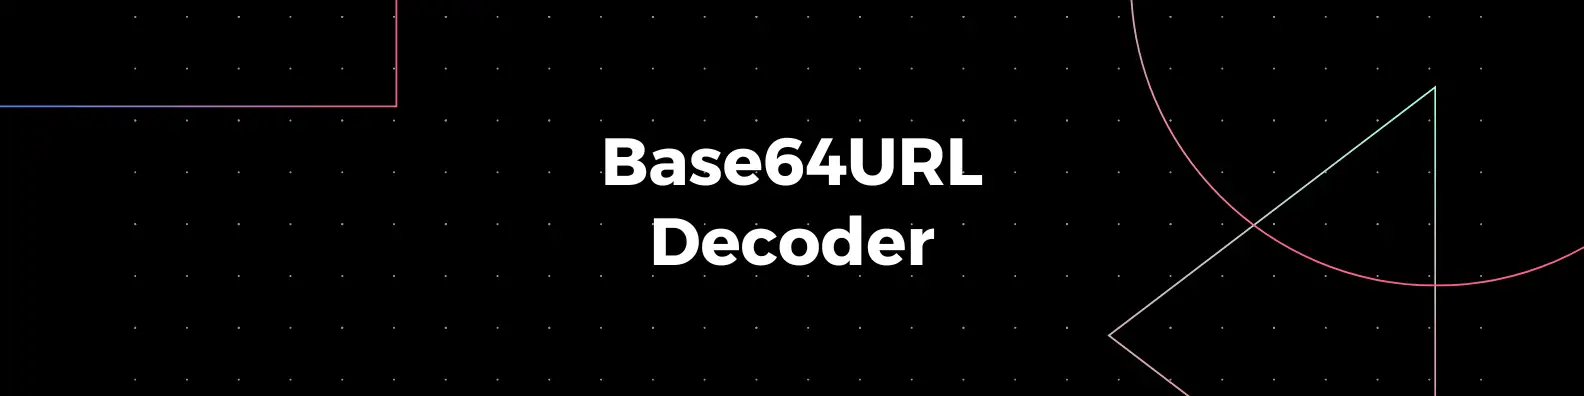 Online Base64URL Decoder: Convert Base64URL to Text